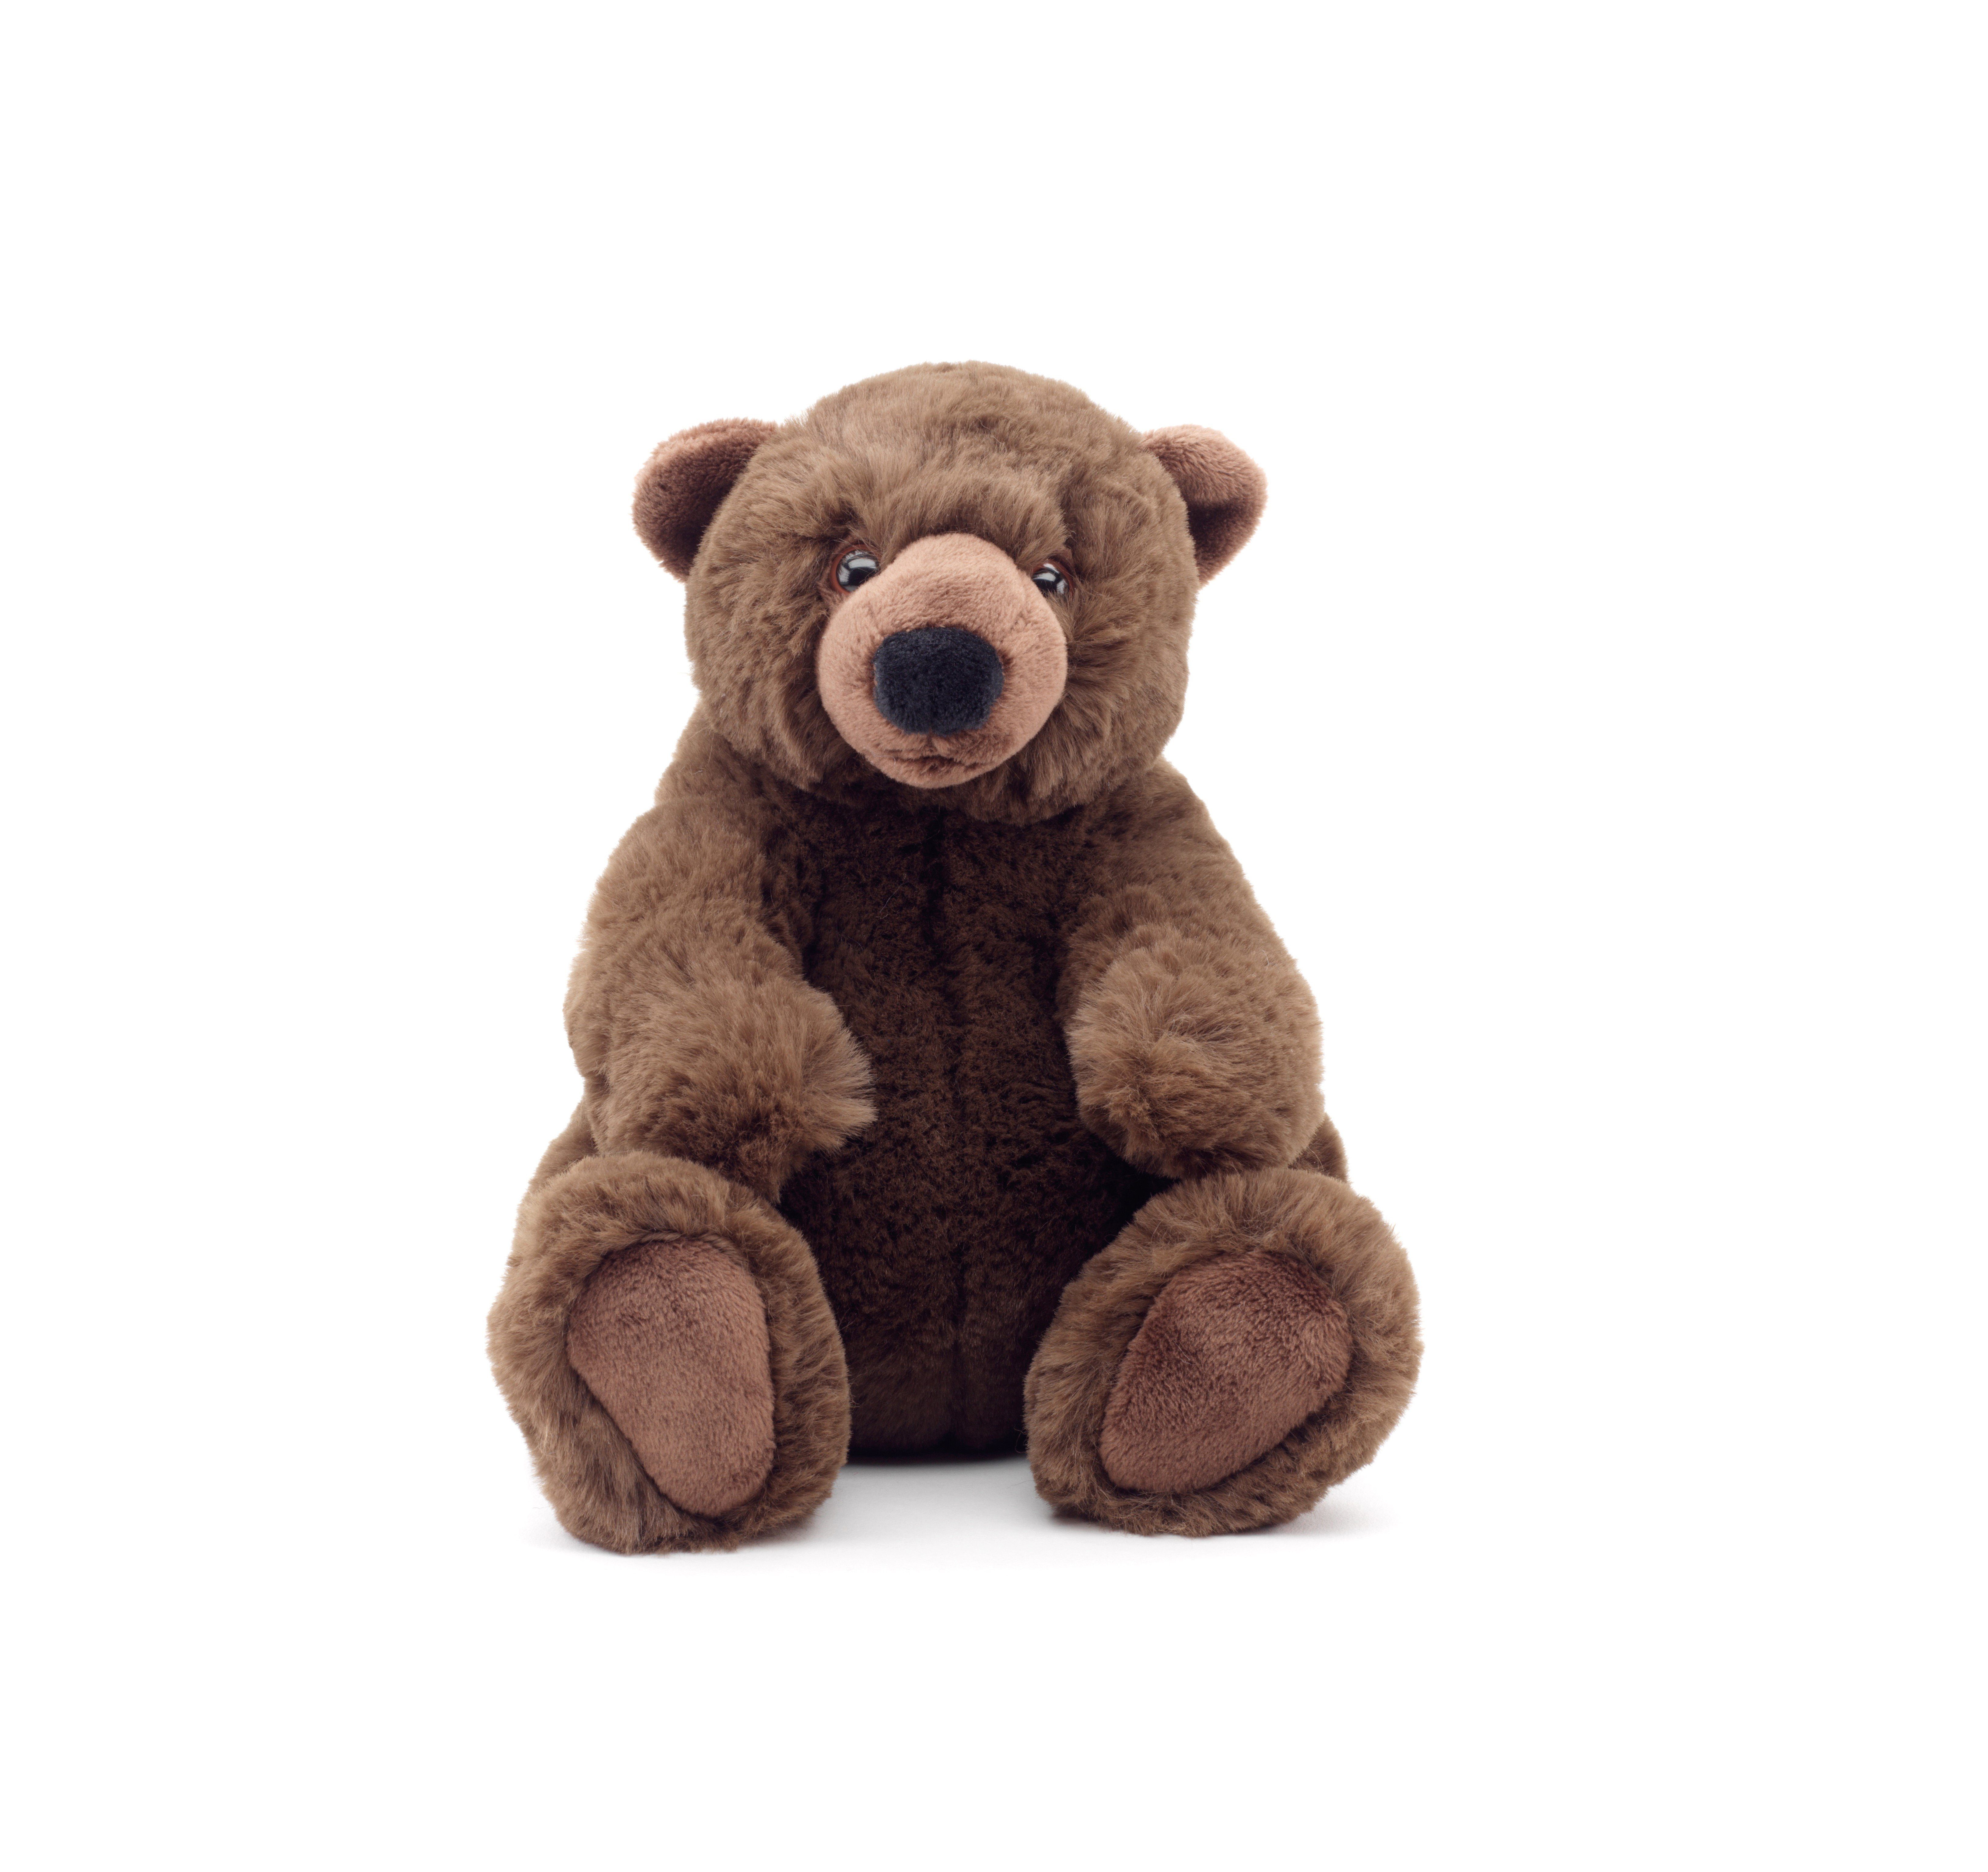 Uni-Toys Kuscheltier "Charlie", Braunbär - superweich - 20 cm - Plüsch-Bär, Teddy, Teddybär, zu 100 % recyceltes Füllmaterial